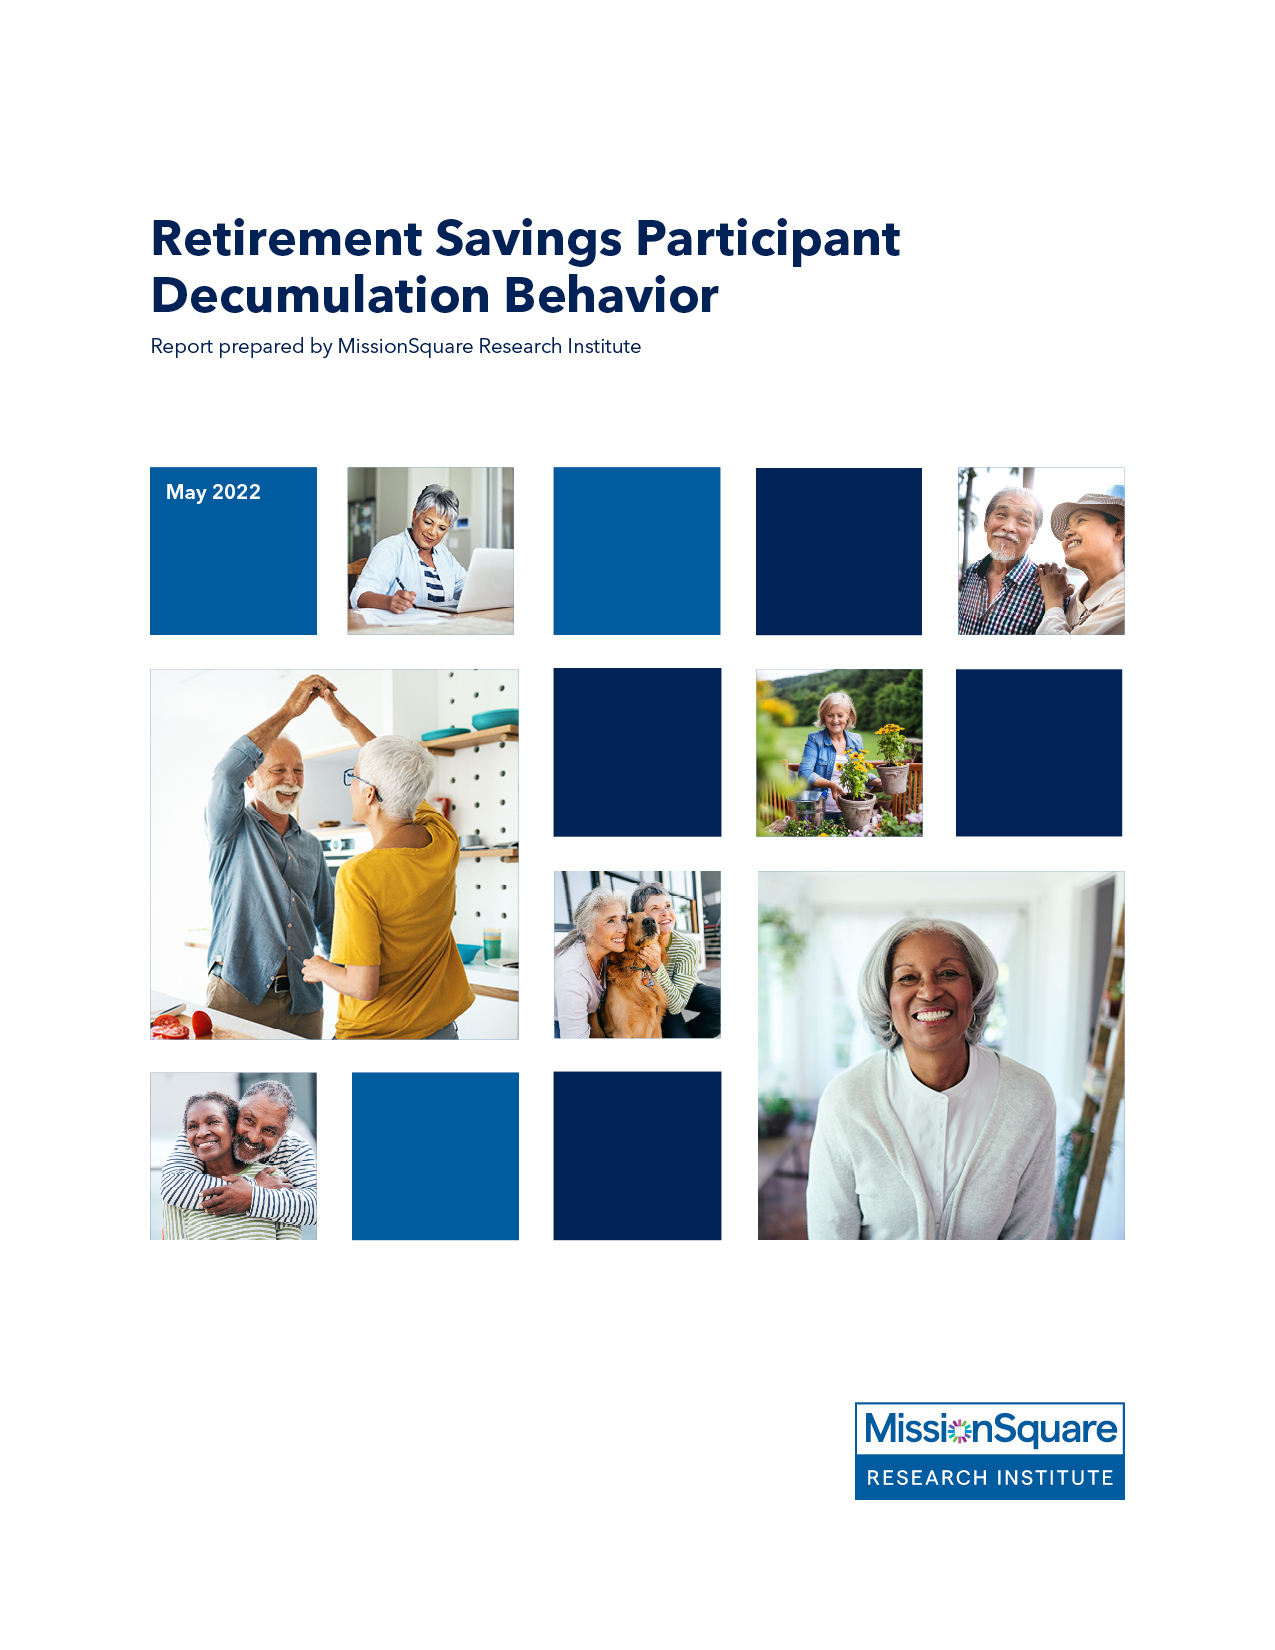 Retirement Savings Participant Decumulation Behavior